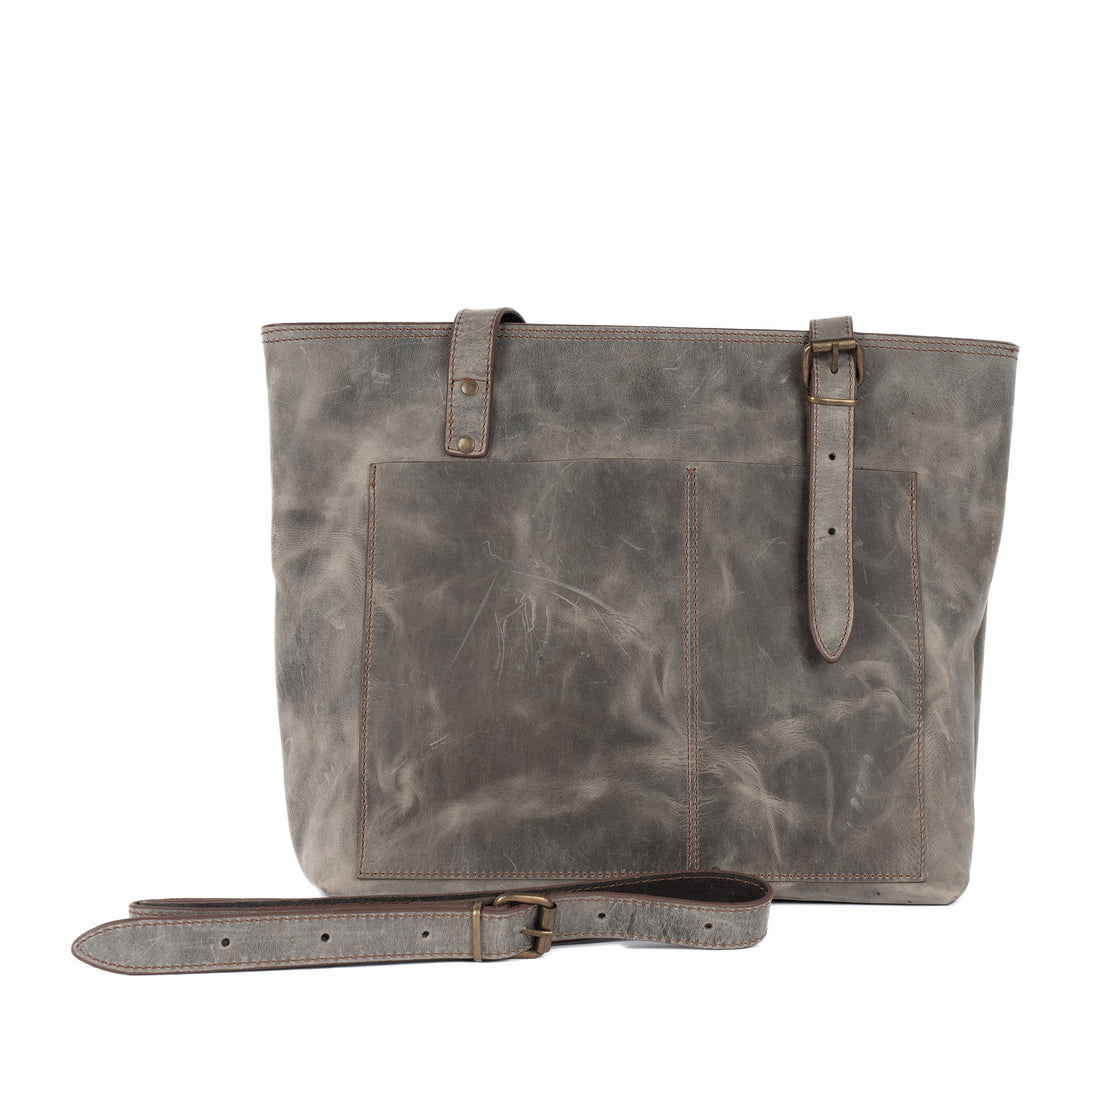 Callisto Leather Tote Bag - Gray - Accessories Zengoda Shop online from Artisan Brands